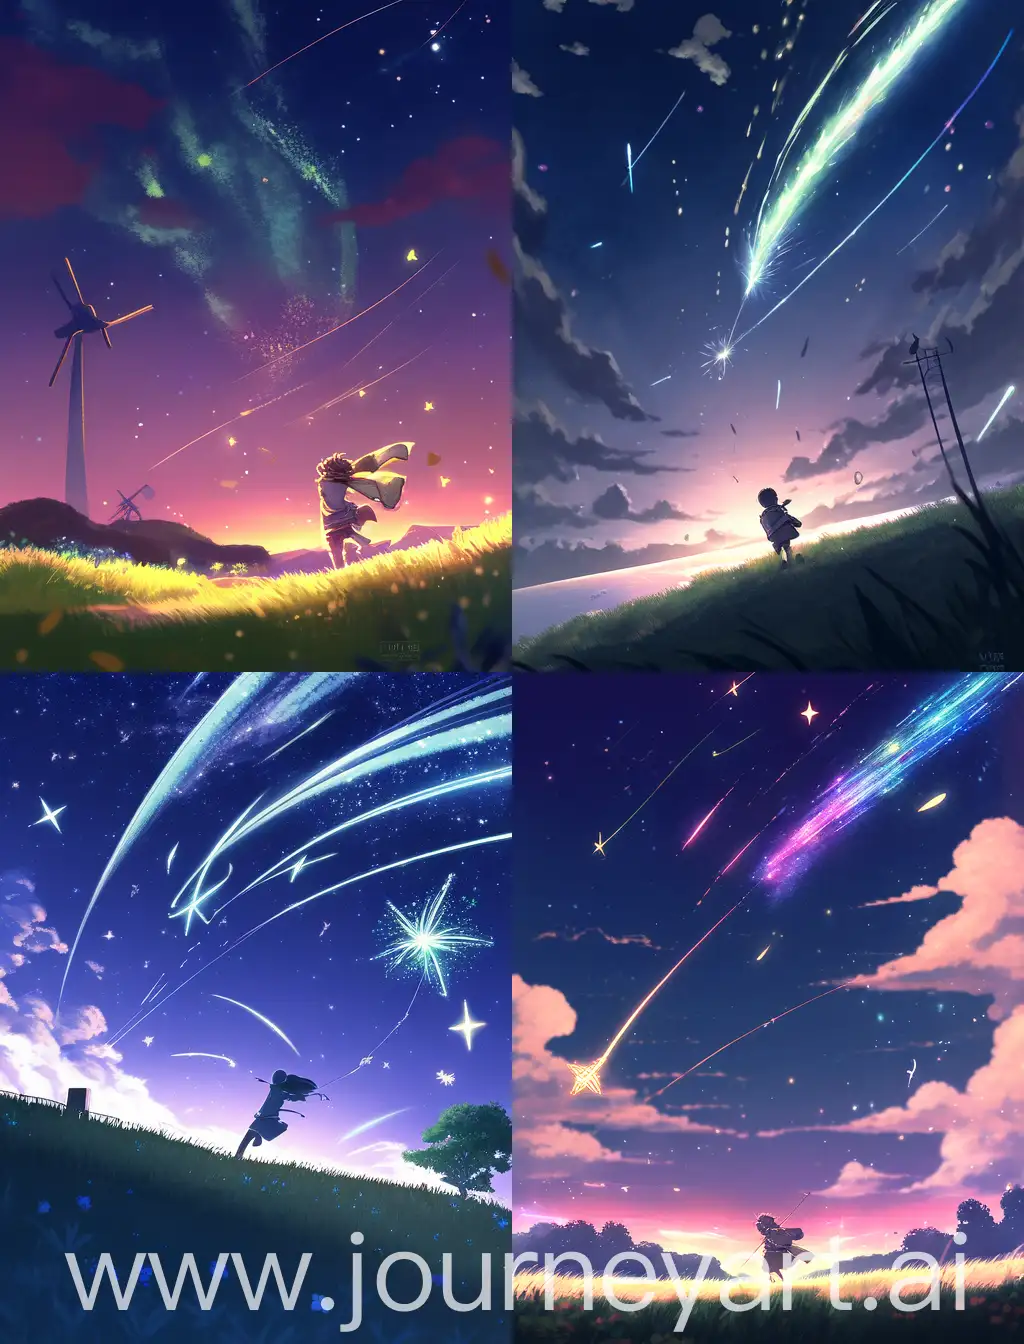 Boy-Chasing-Milky-Way-Kite-on-Grassland